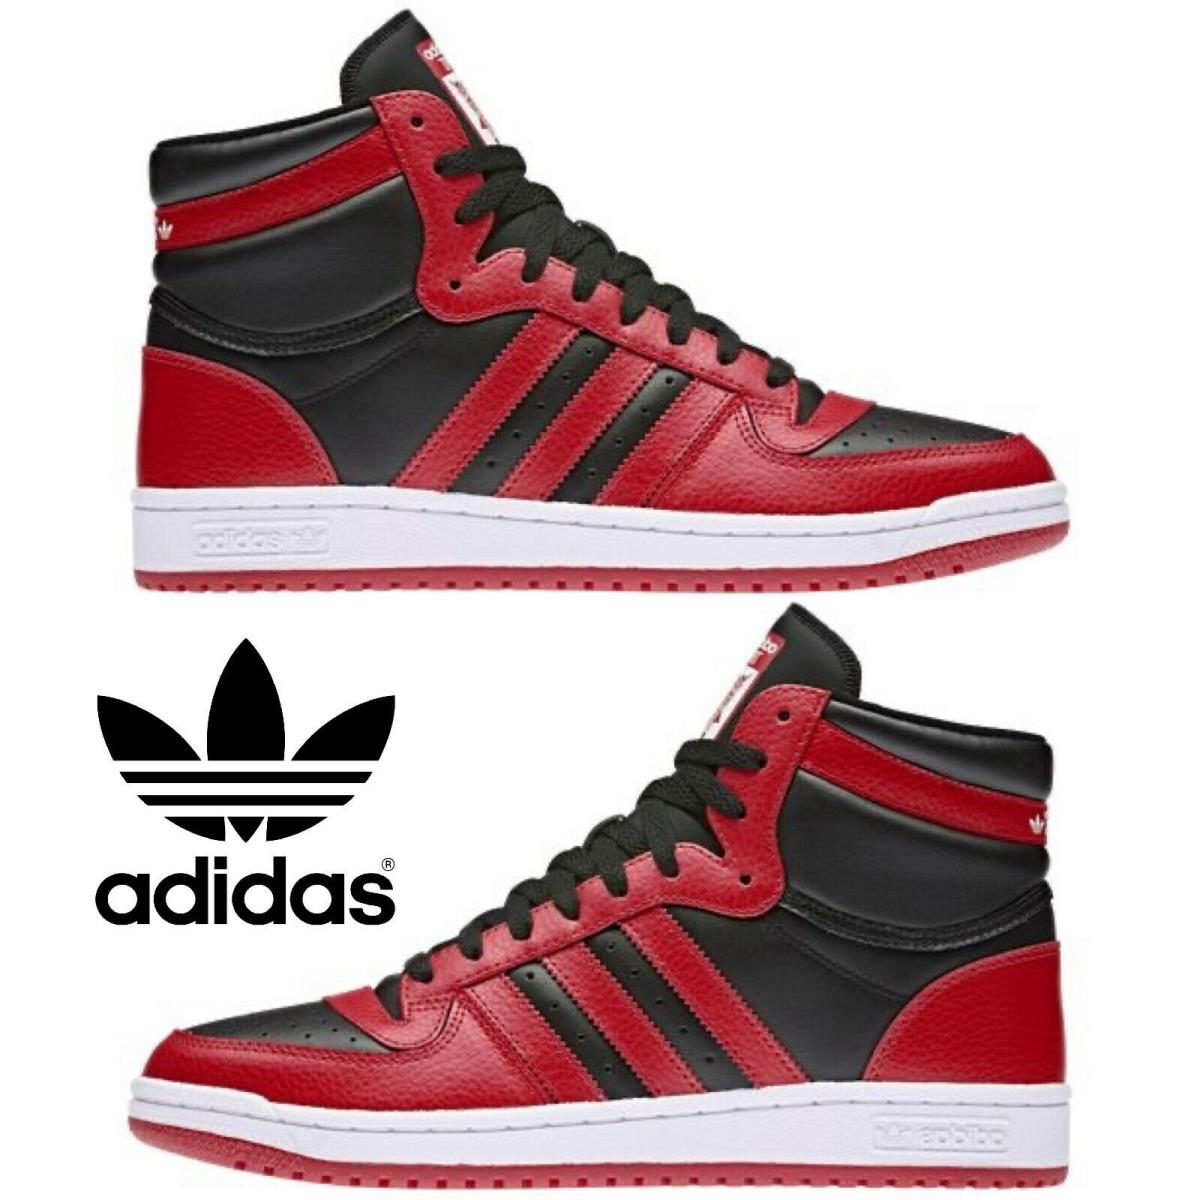 Adidas Originals Top Ten Hi Men`s Sneakers Comfort Casual Shoes Black Red